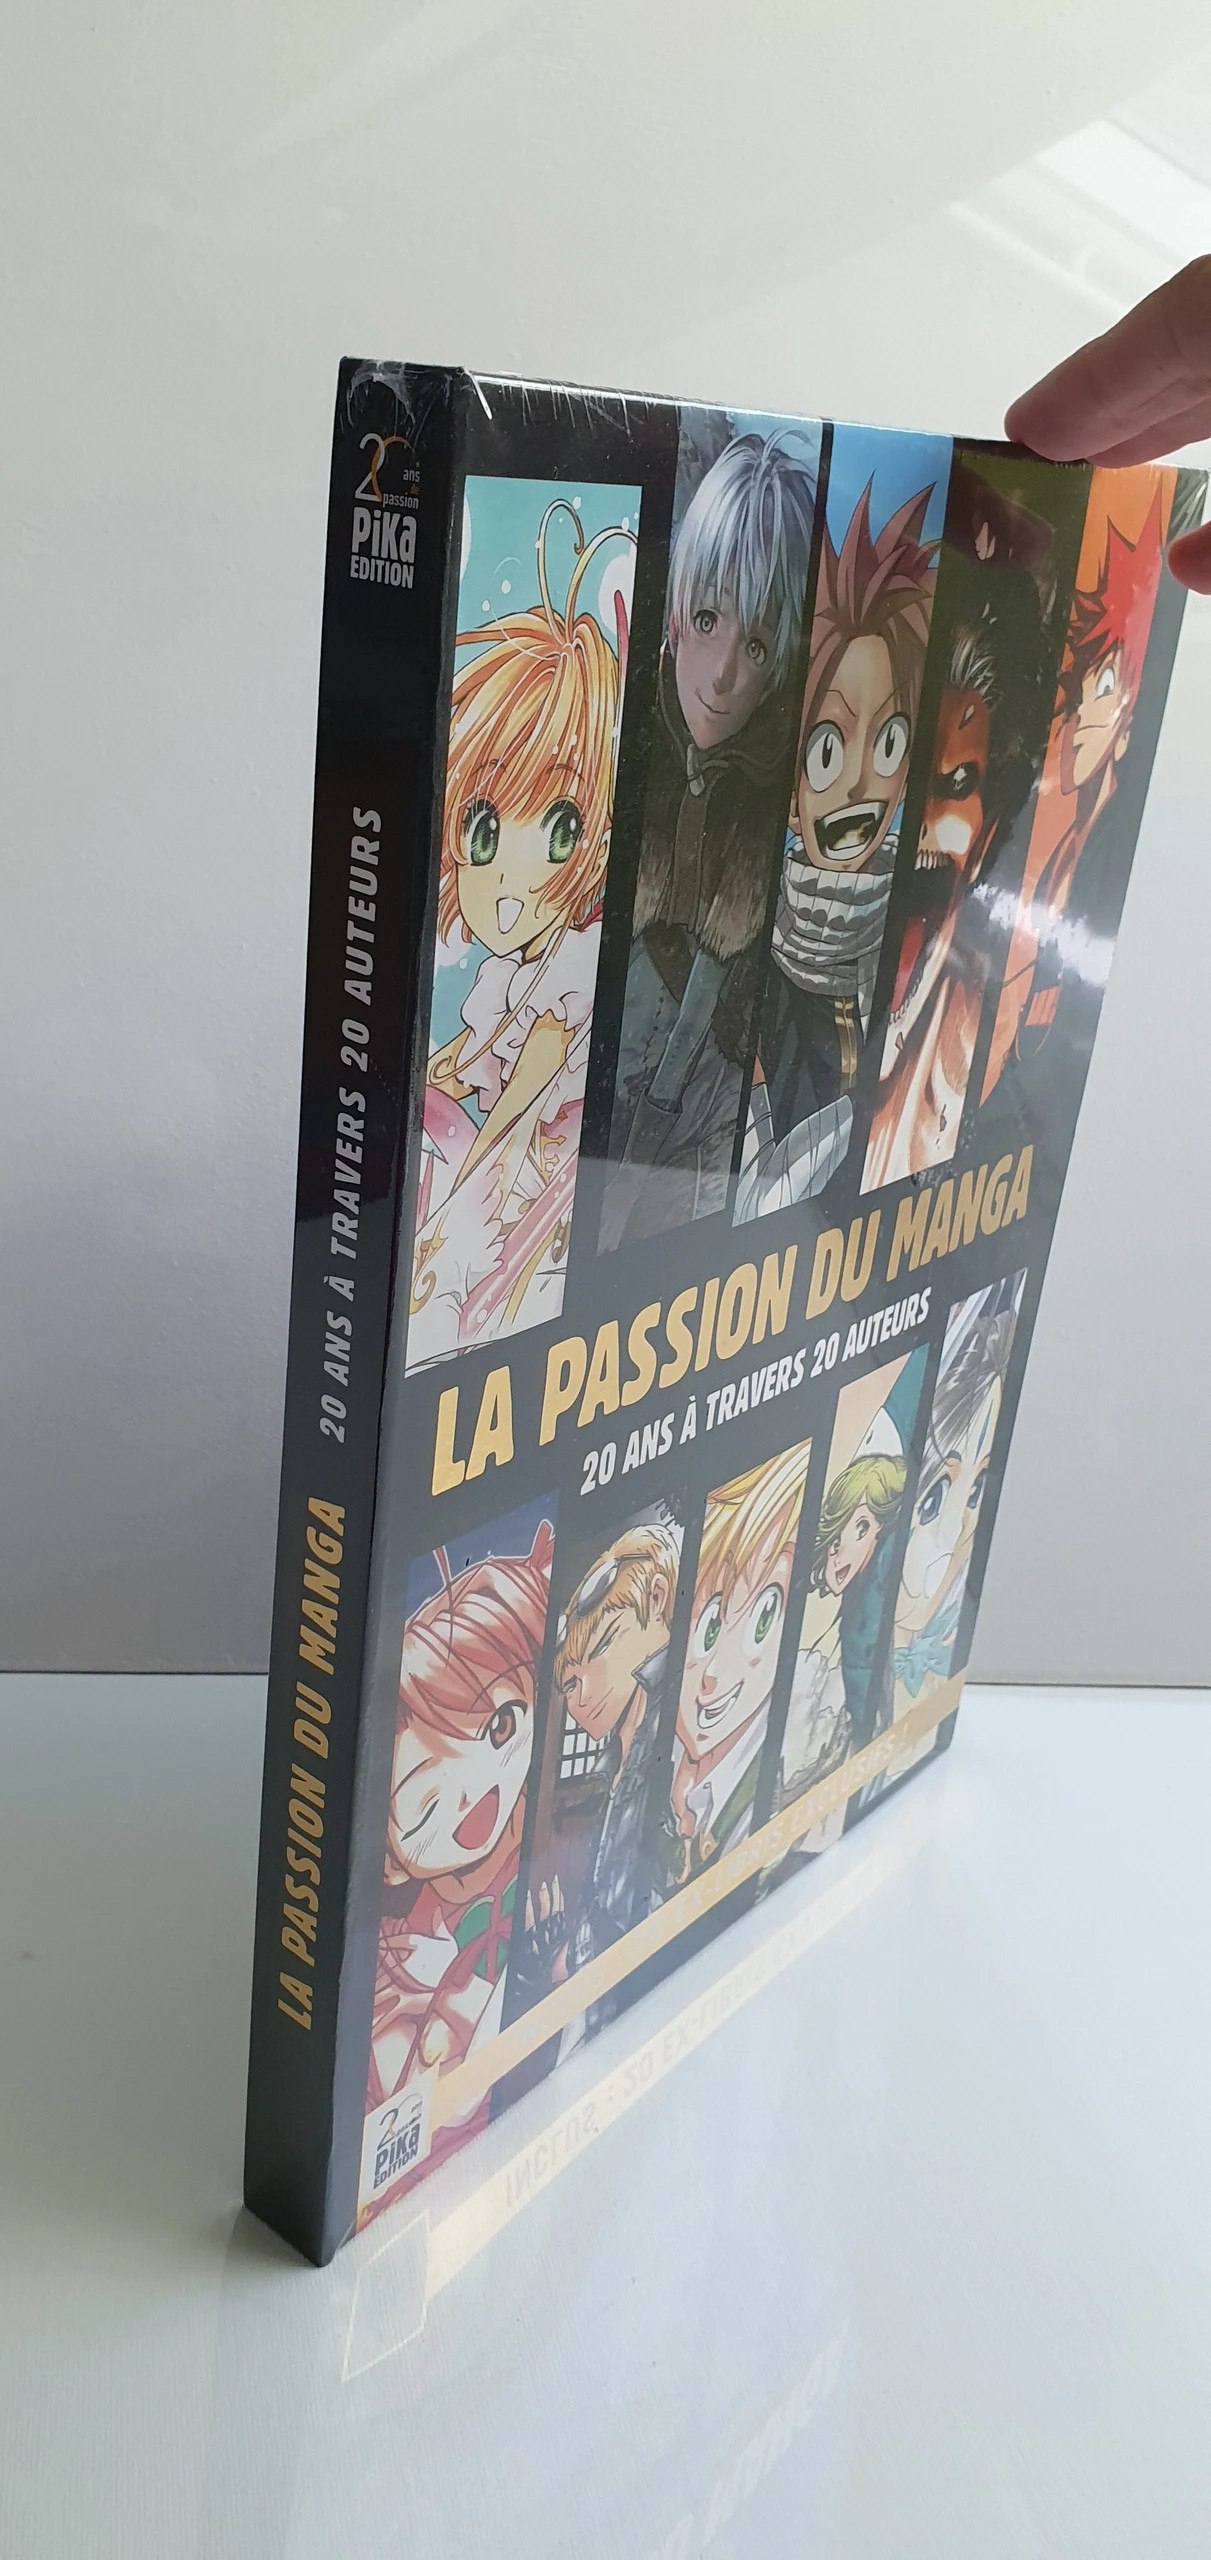 Pika Edition : La passion du manga